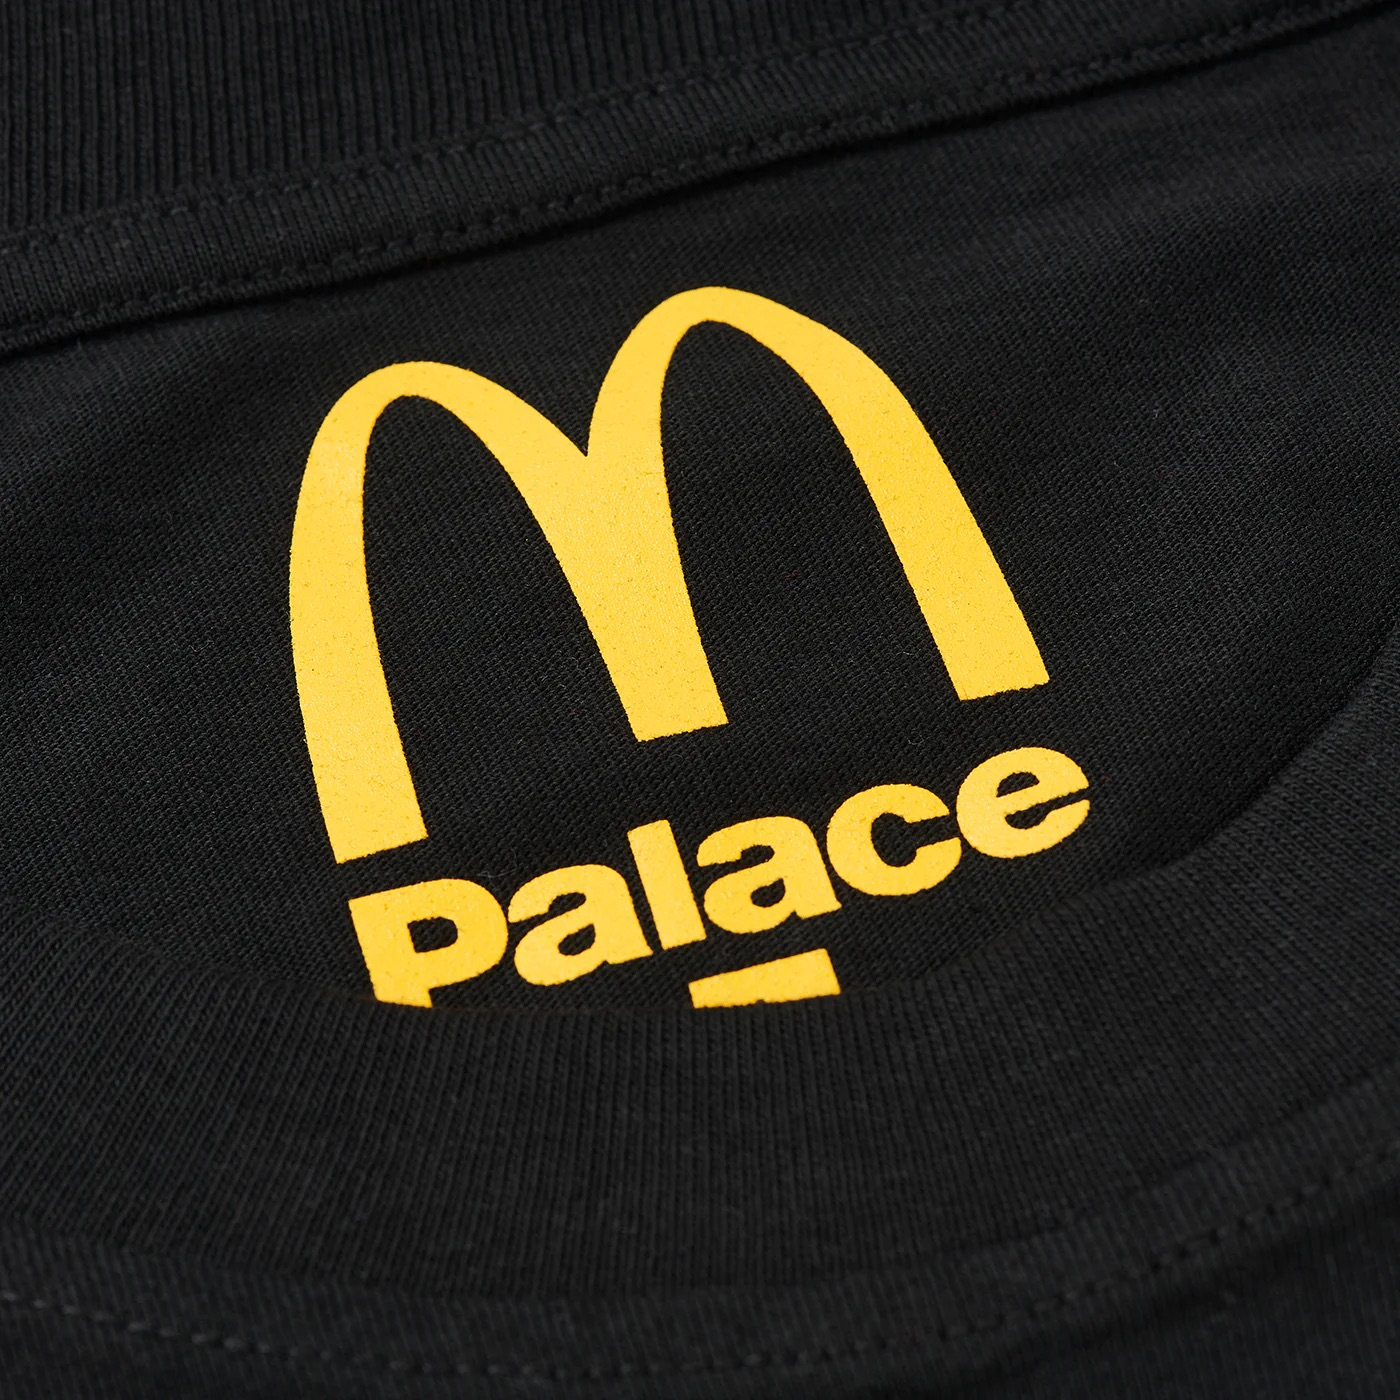 Palace Mcdonald's Description T-Shirt 1 Black - Palace McDonalds